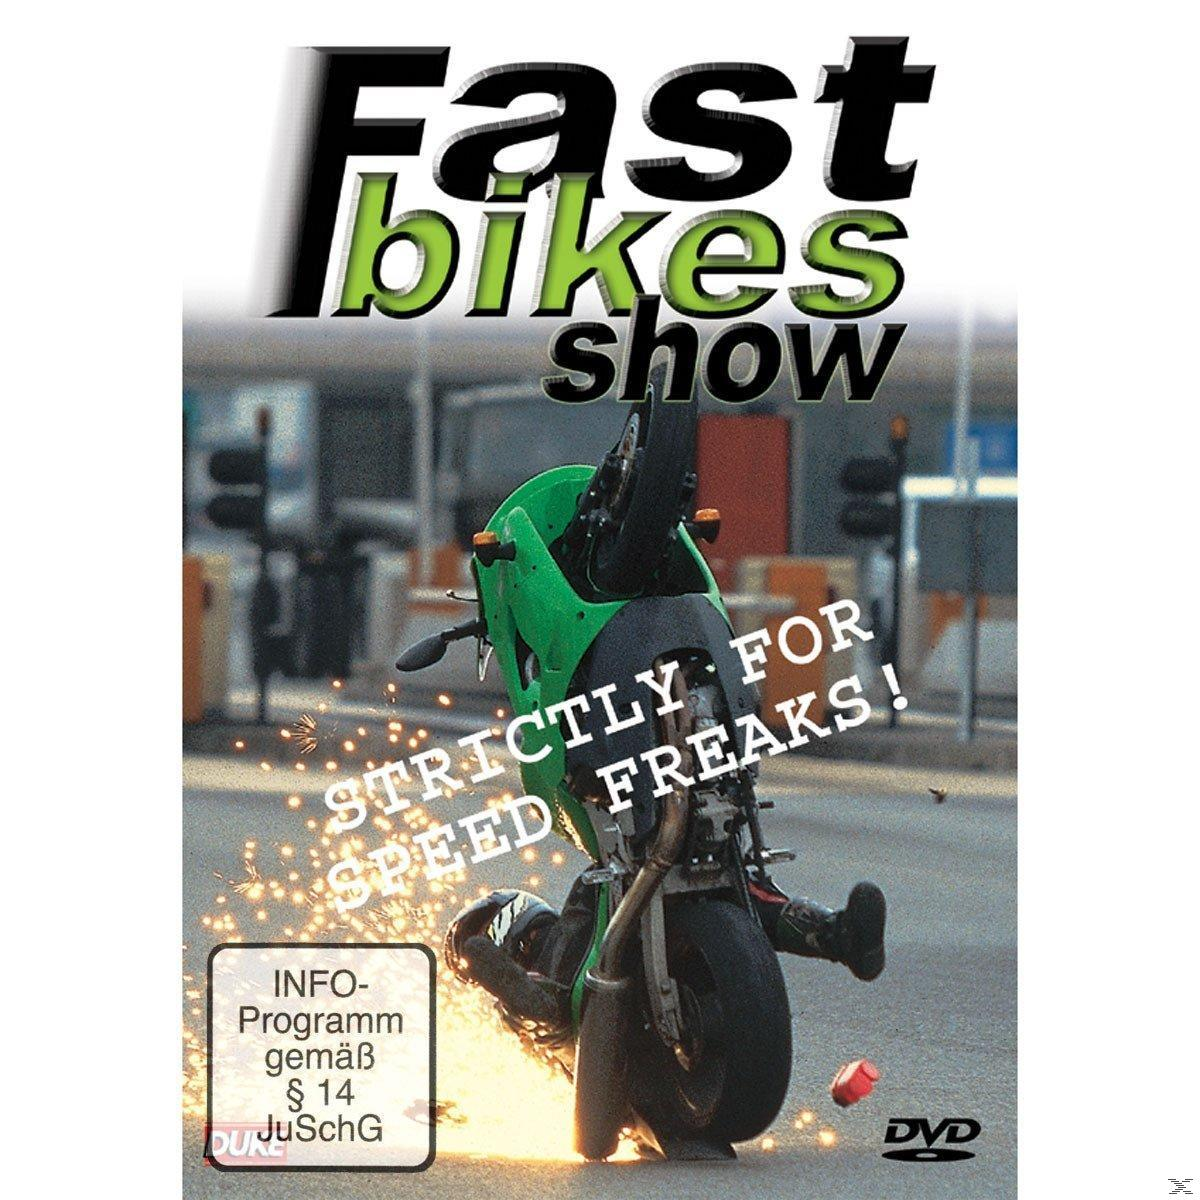 Show Bikes DVD Fast 1